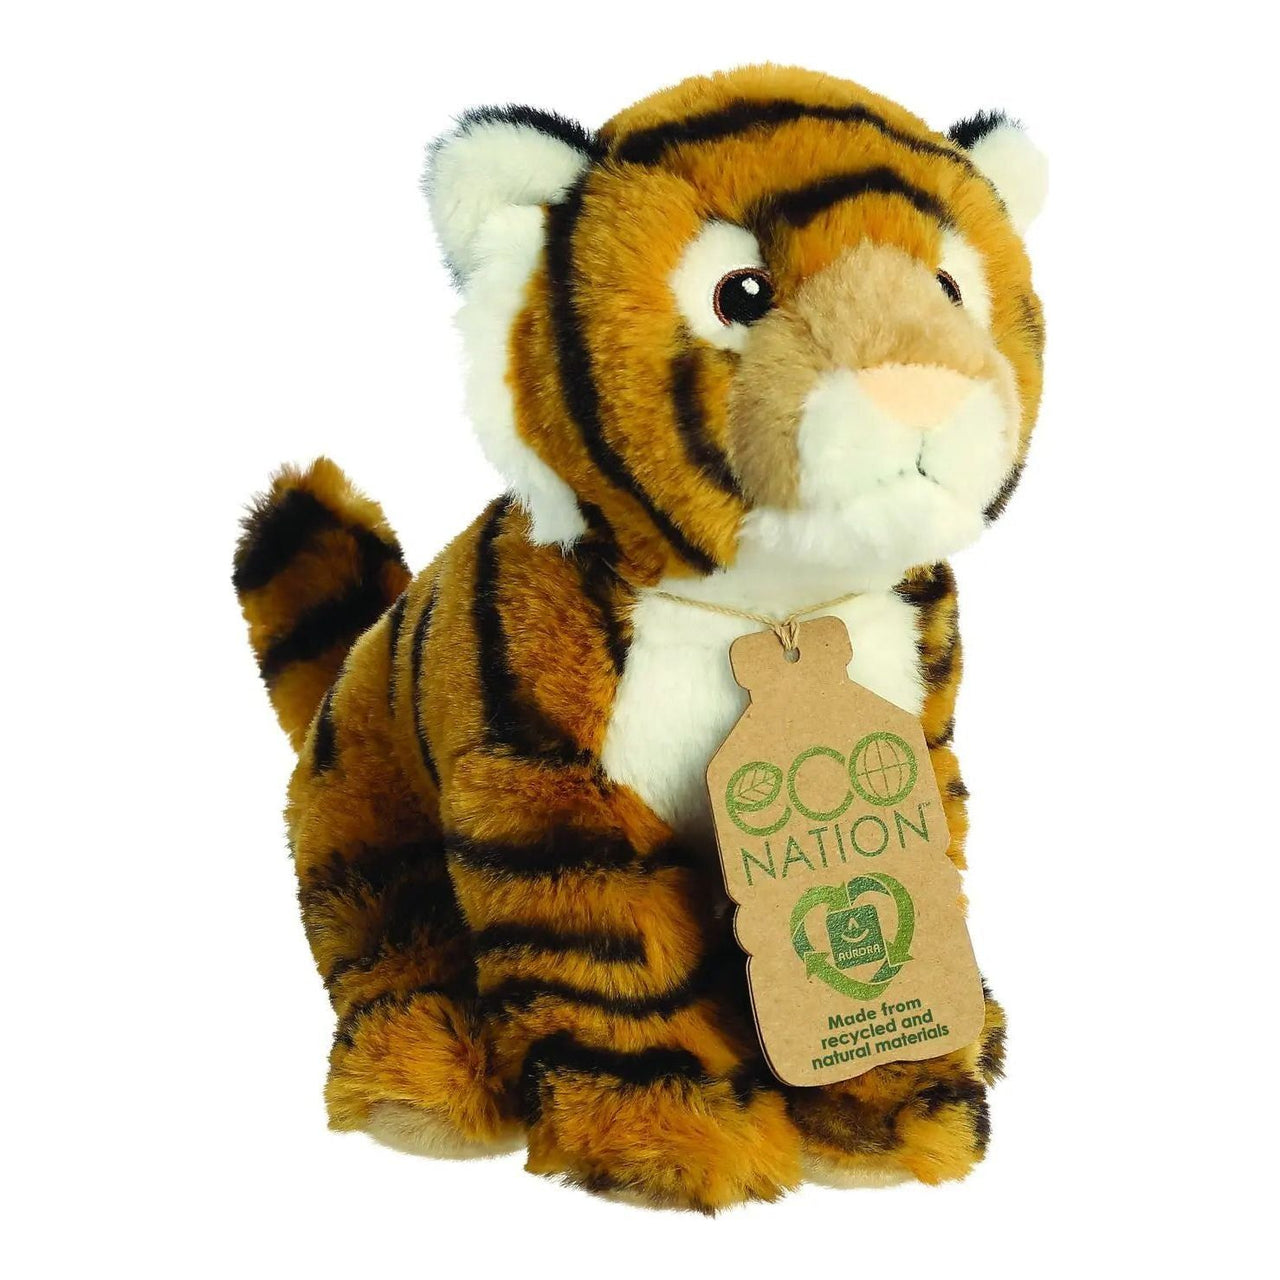 Eco Nation Bengal Tiger 9" Plush Toy Aurora